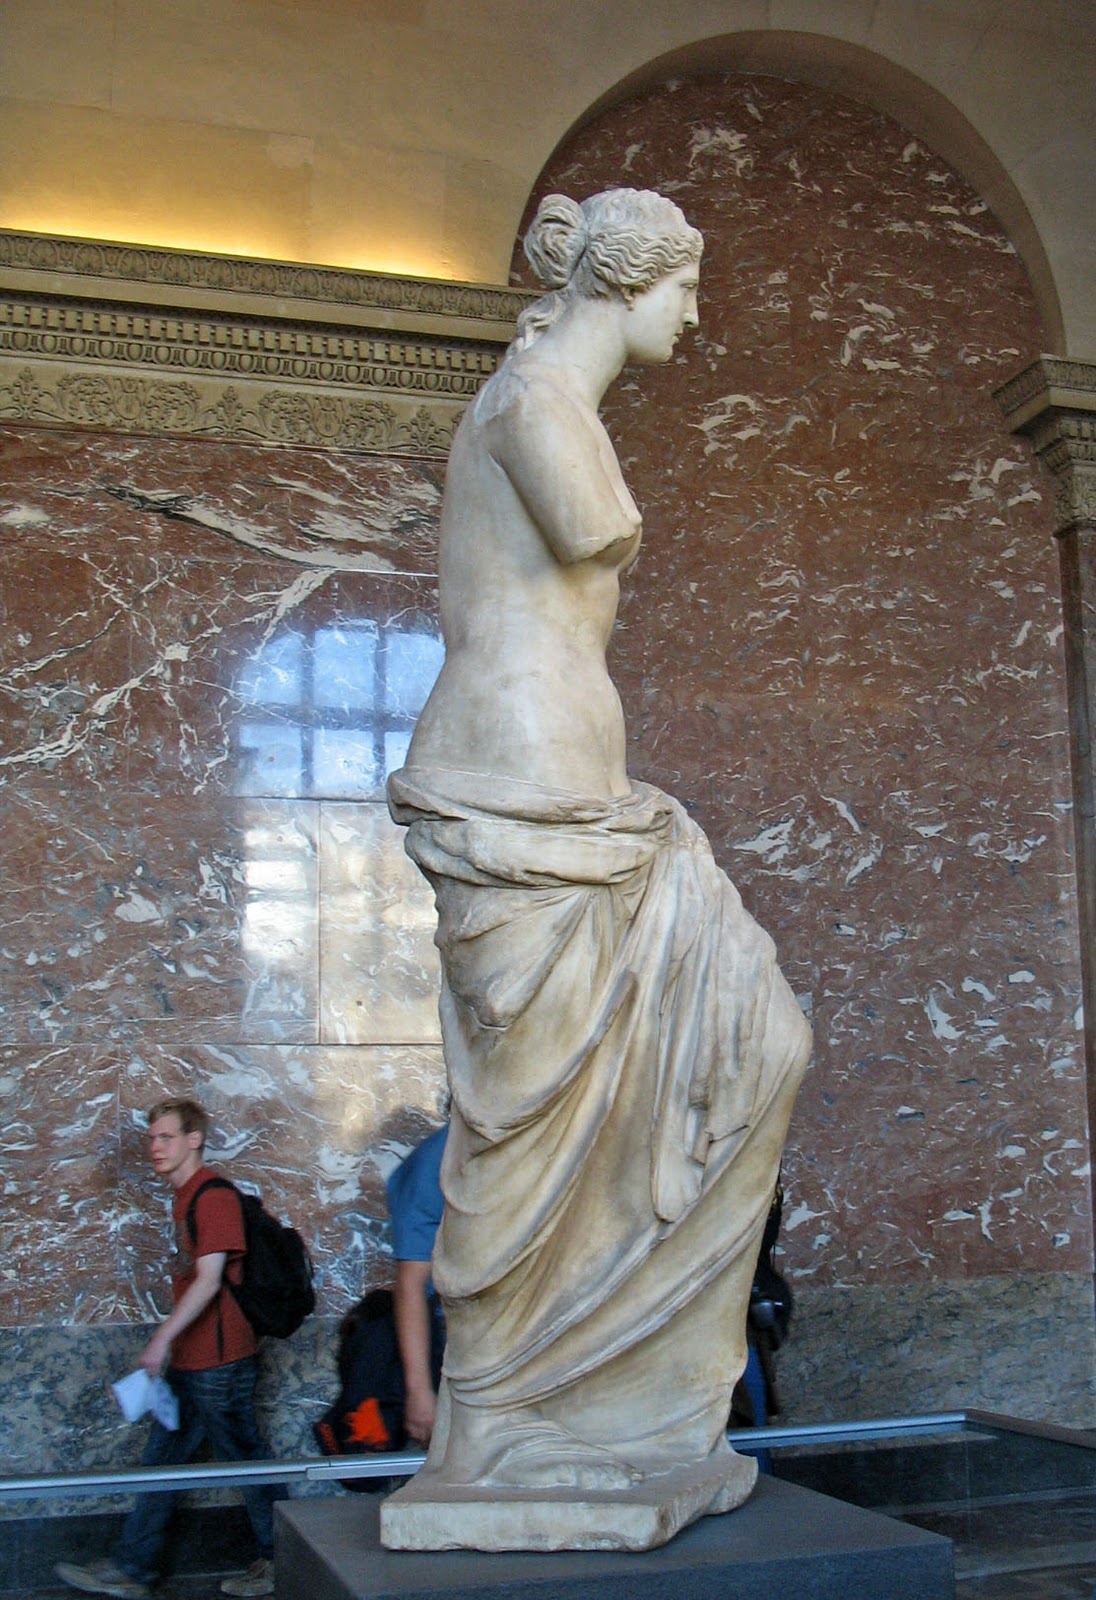 Venus de Milo at the Louvre in Paris.